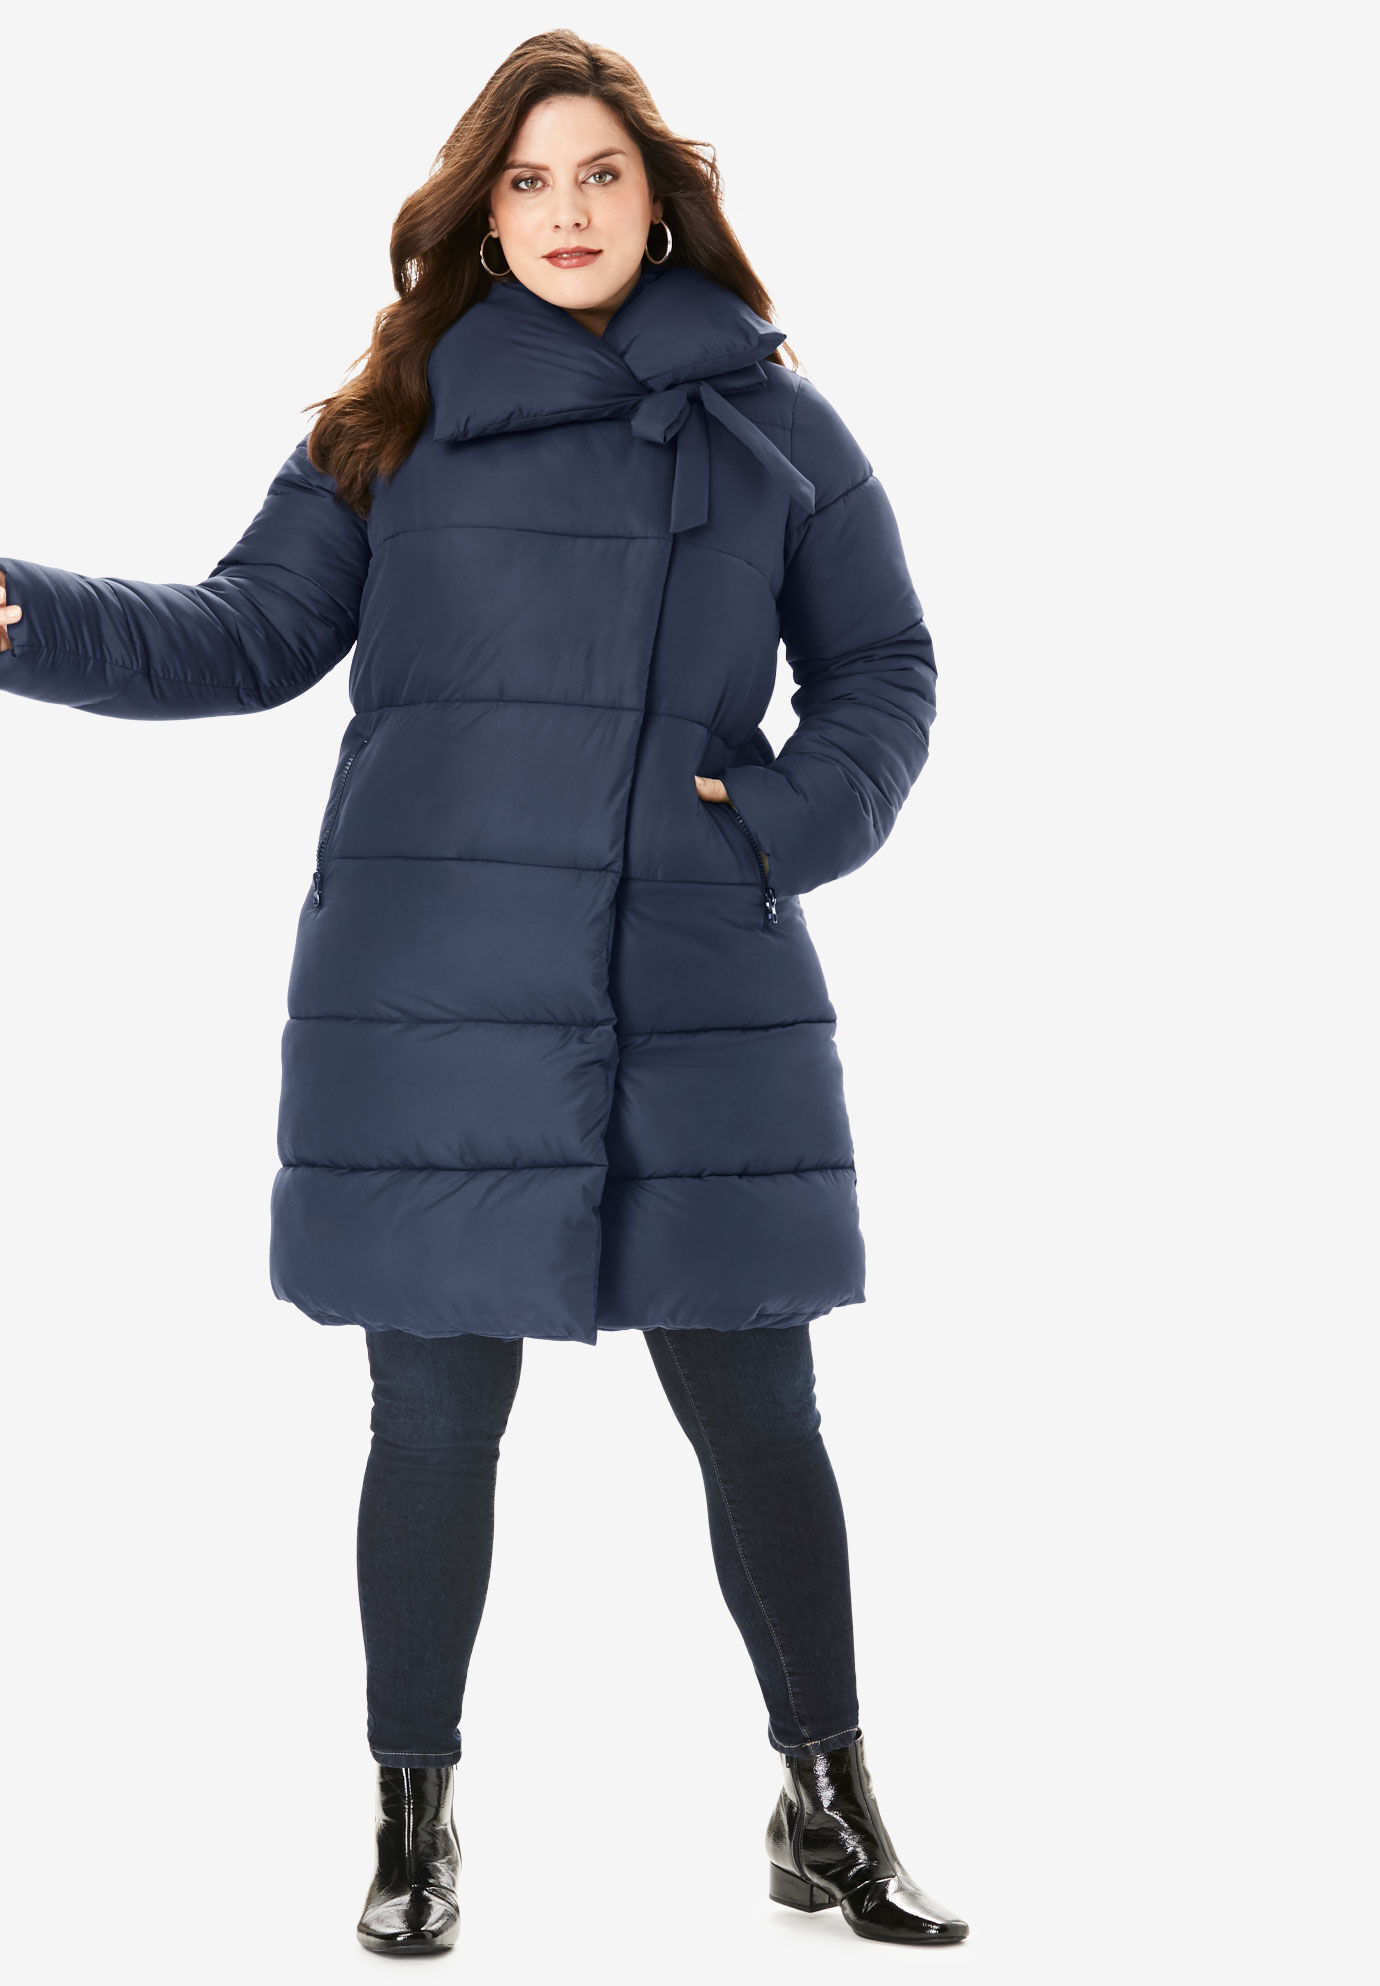 plus size womens winter jackets 4x